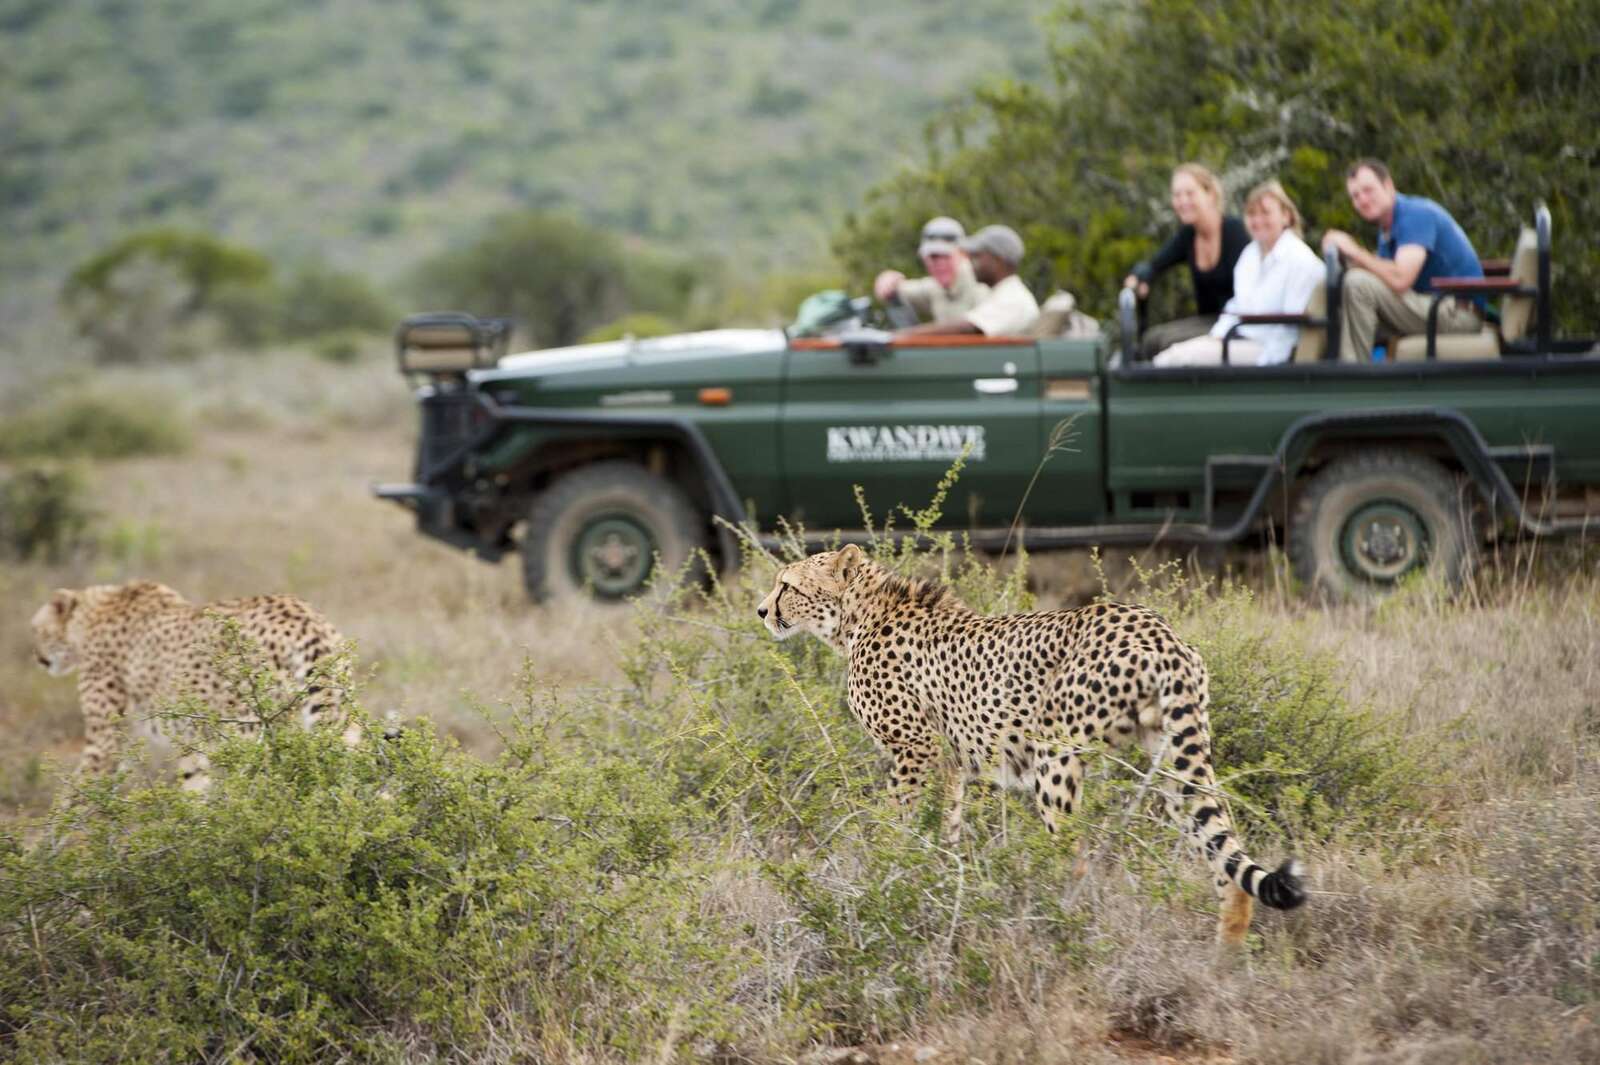 Best south african safari trip advisor